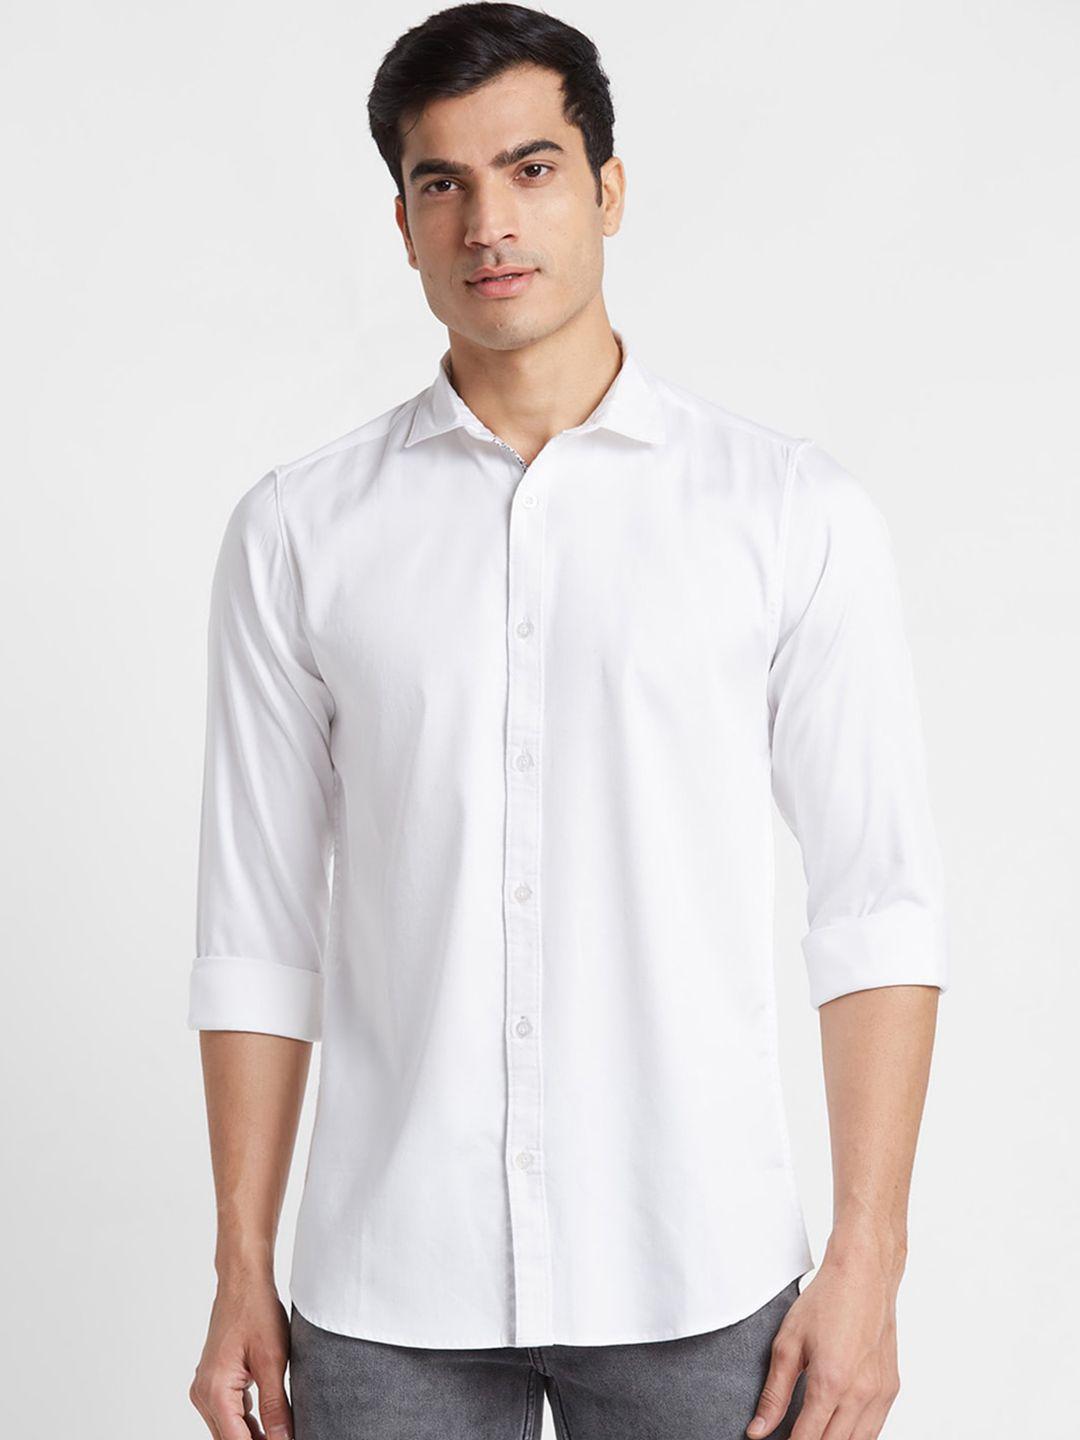 globus-original-pure-cotton-casual-shirt